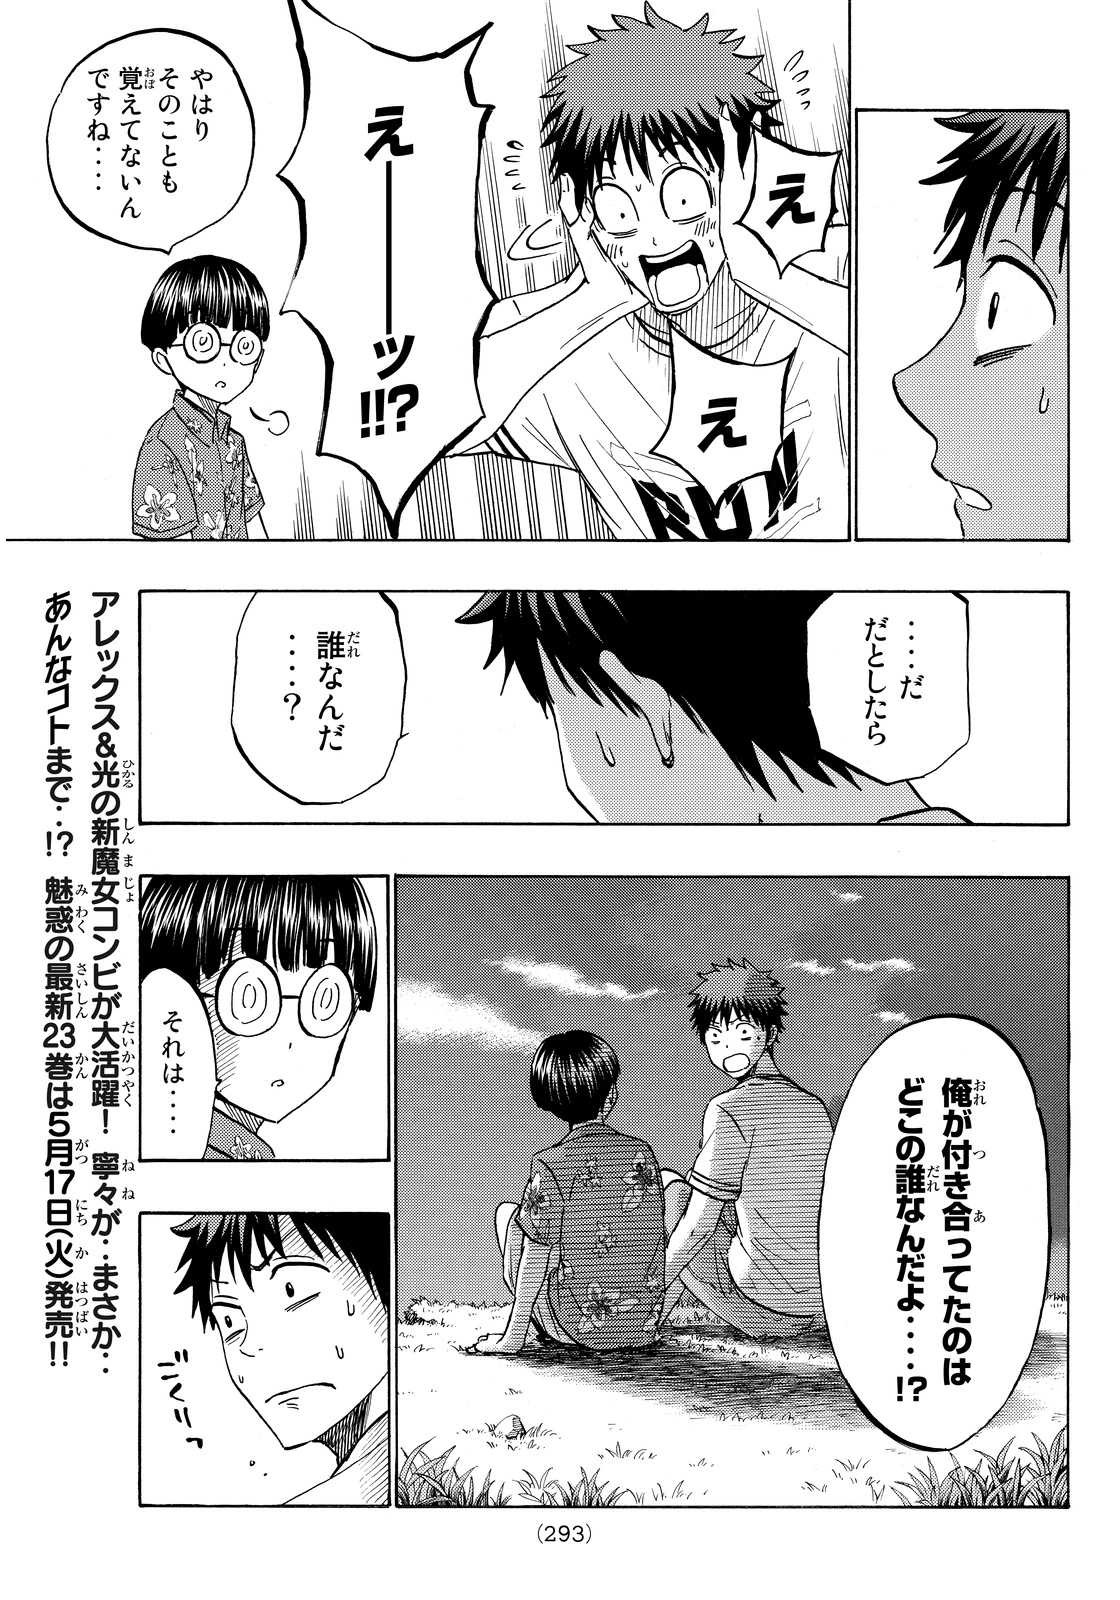 Yamada-kun to 7-nin no Majo - Chapter 203 - Page 3